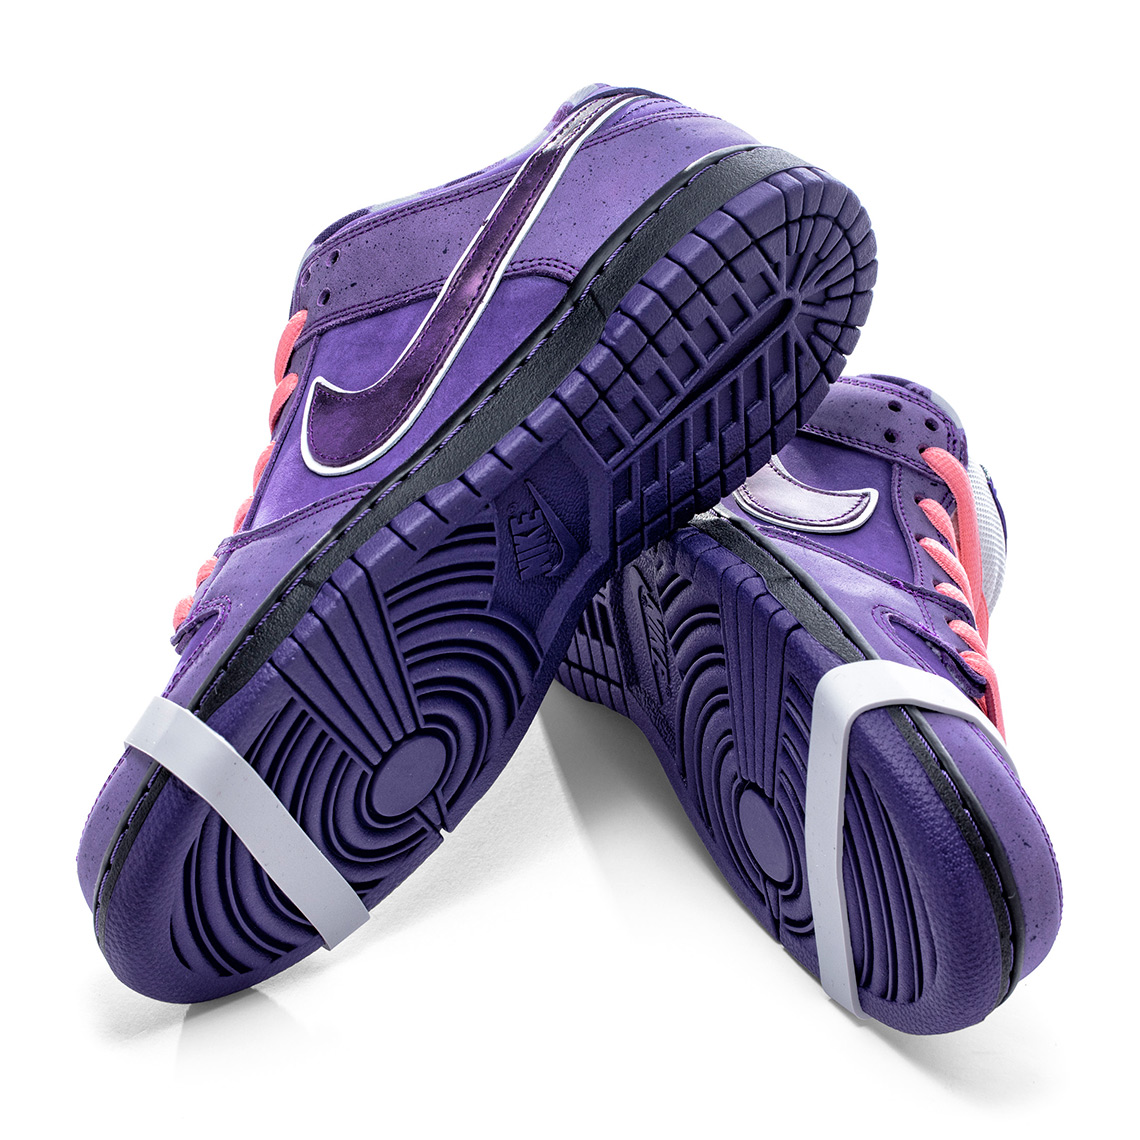 Concepts Purple Lobster Nike SB Dunk Release Date | SneakerNews.com